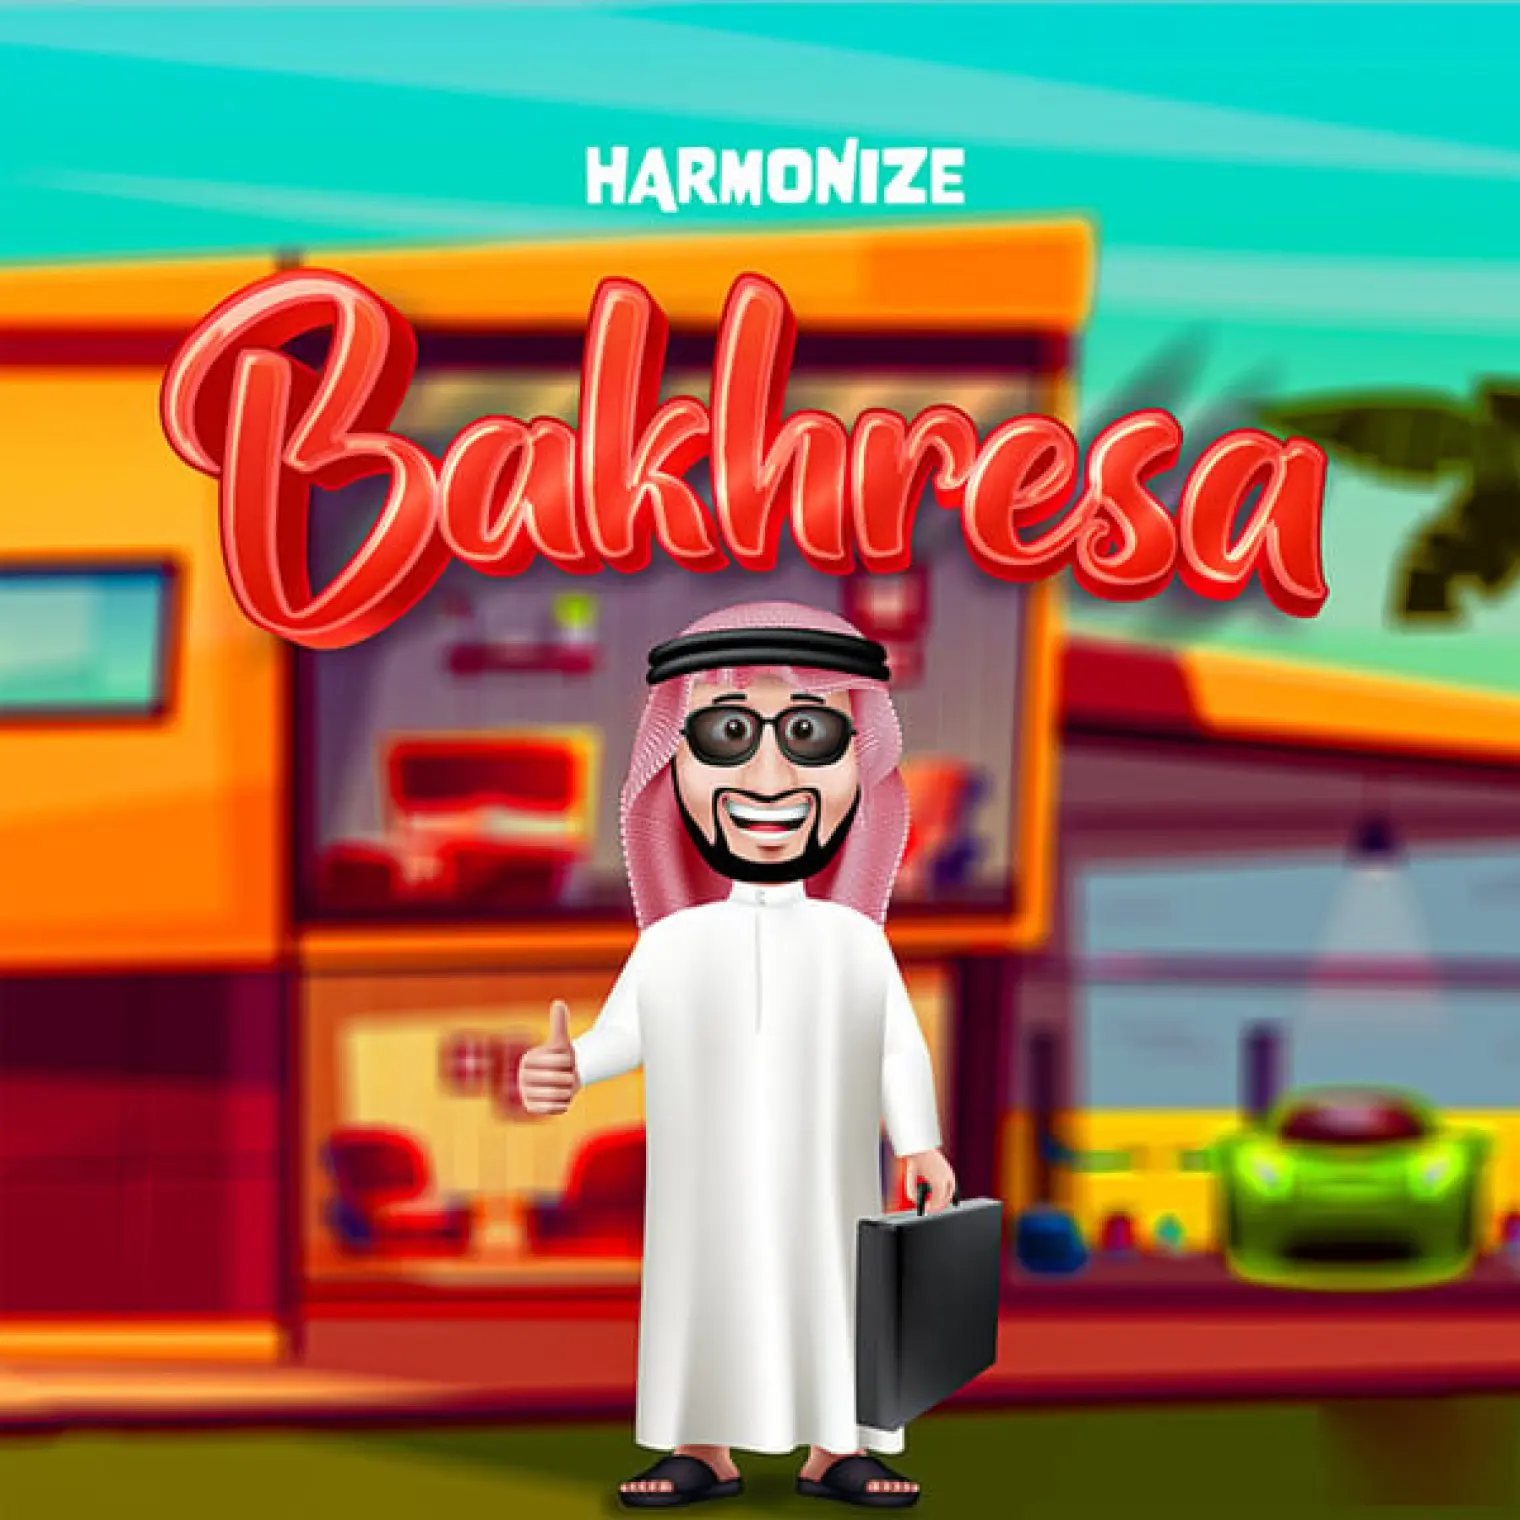 Bakhresa -  Harmonize 